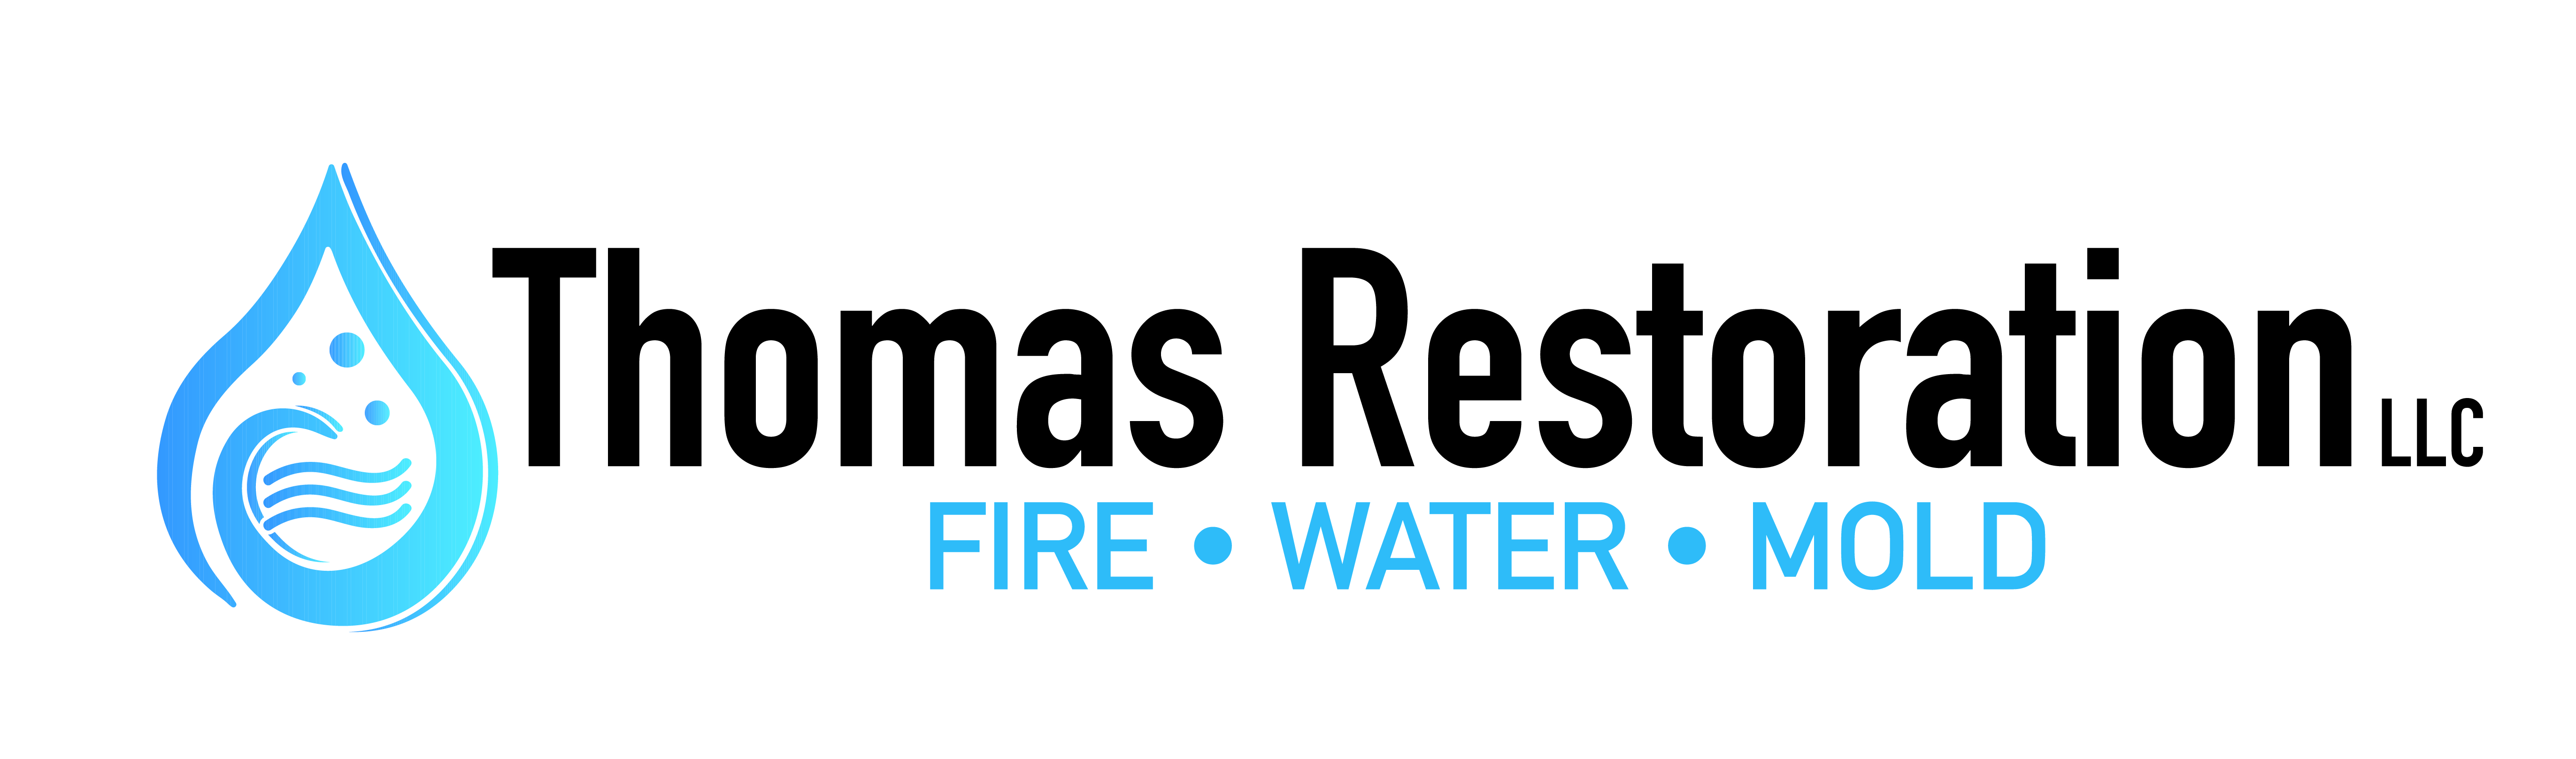 Thomas Restoration, LLC Logo